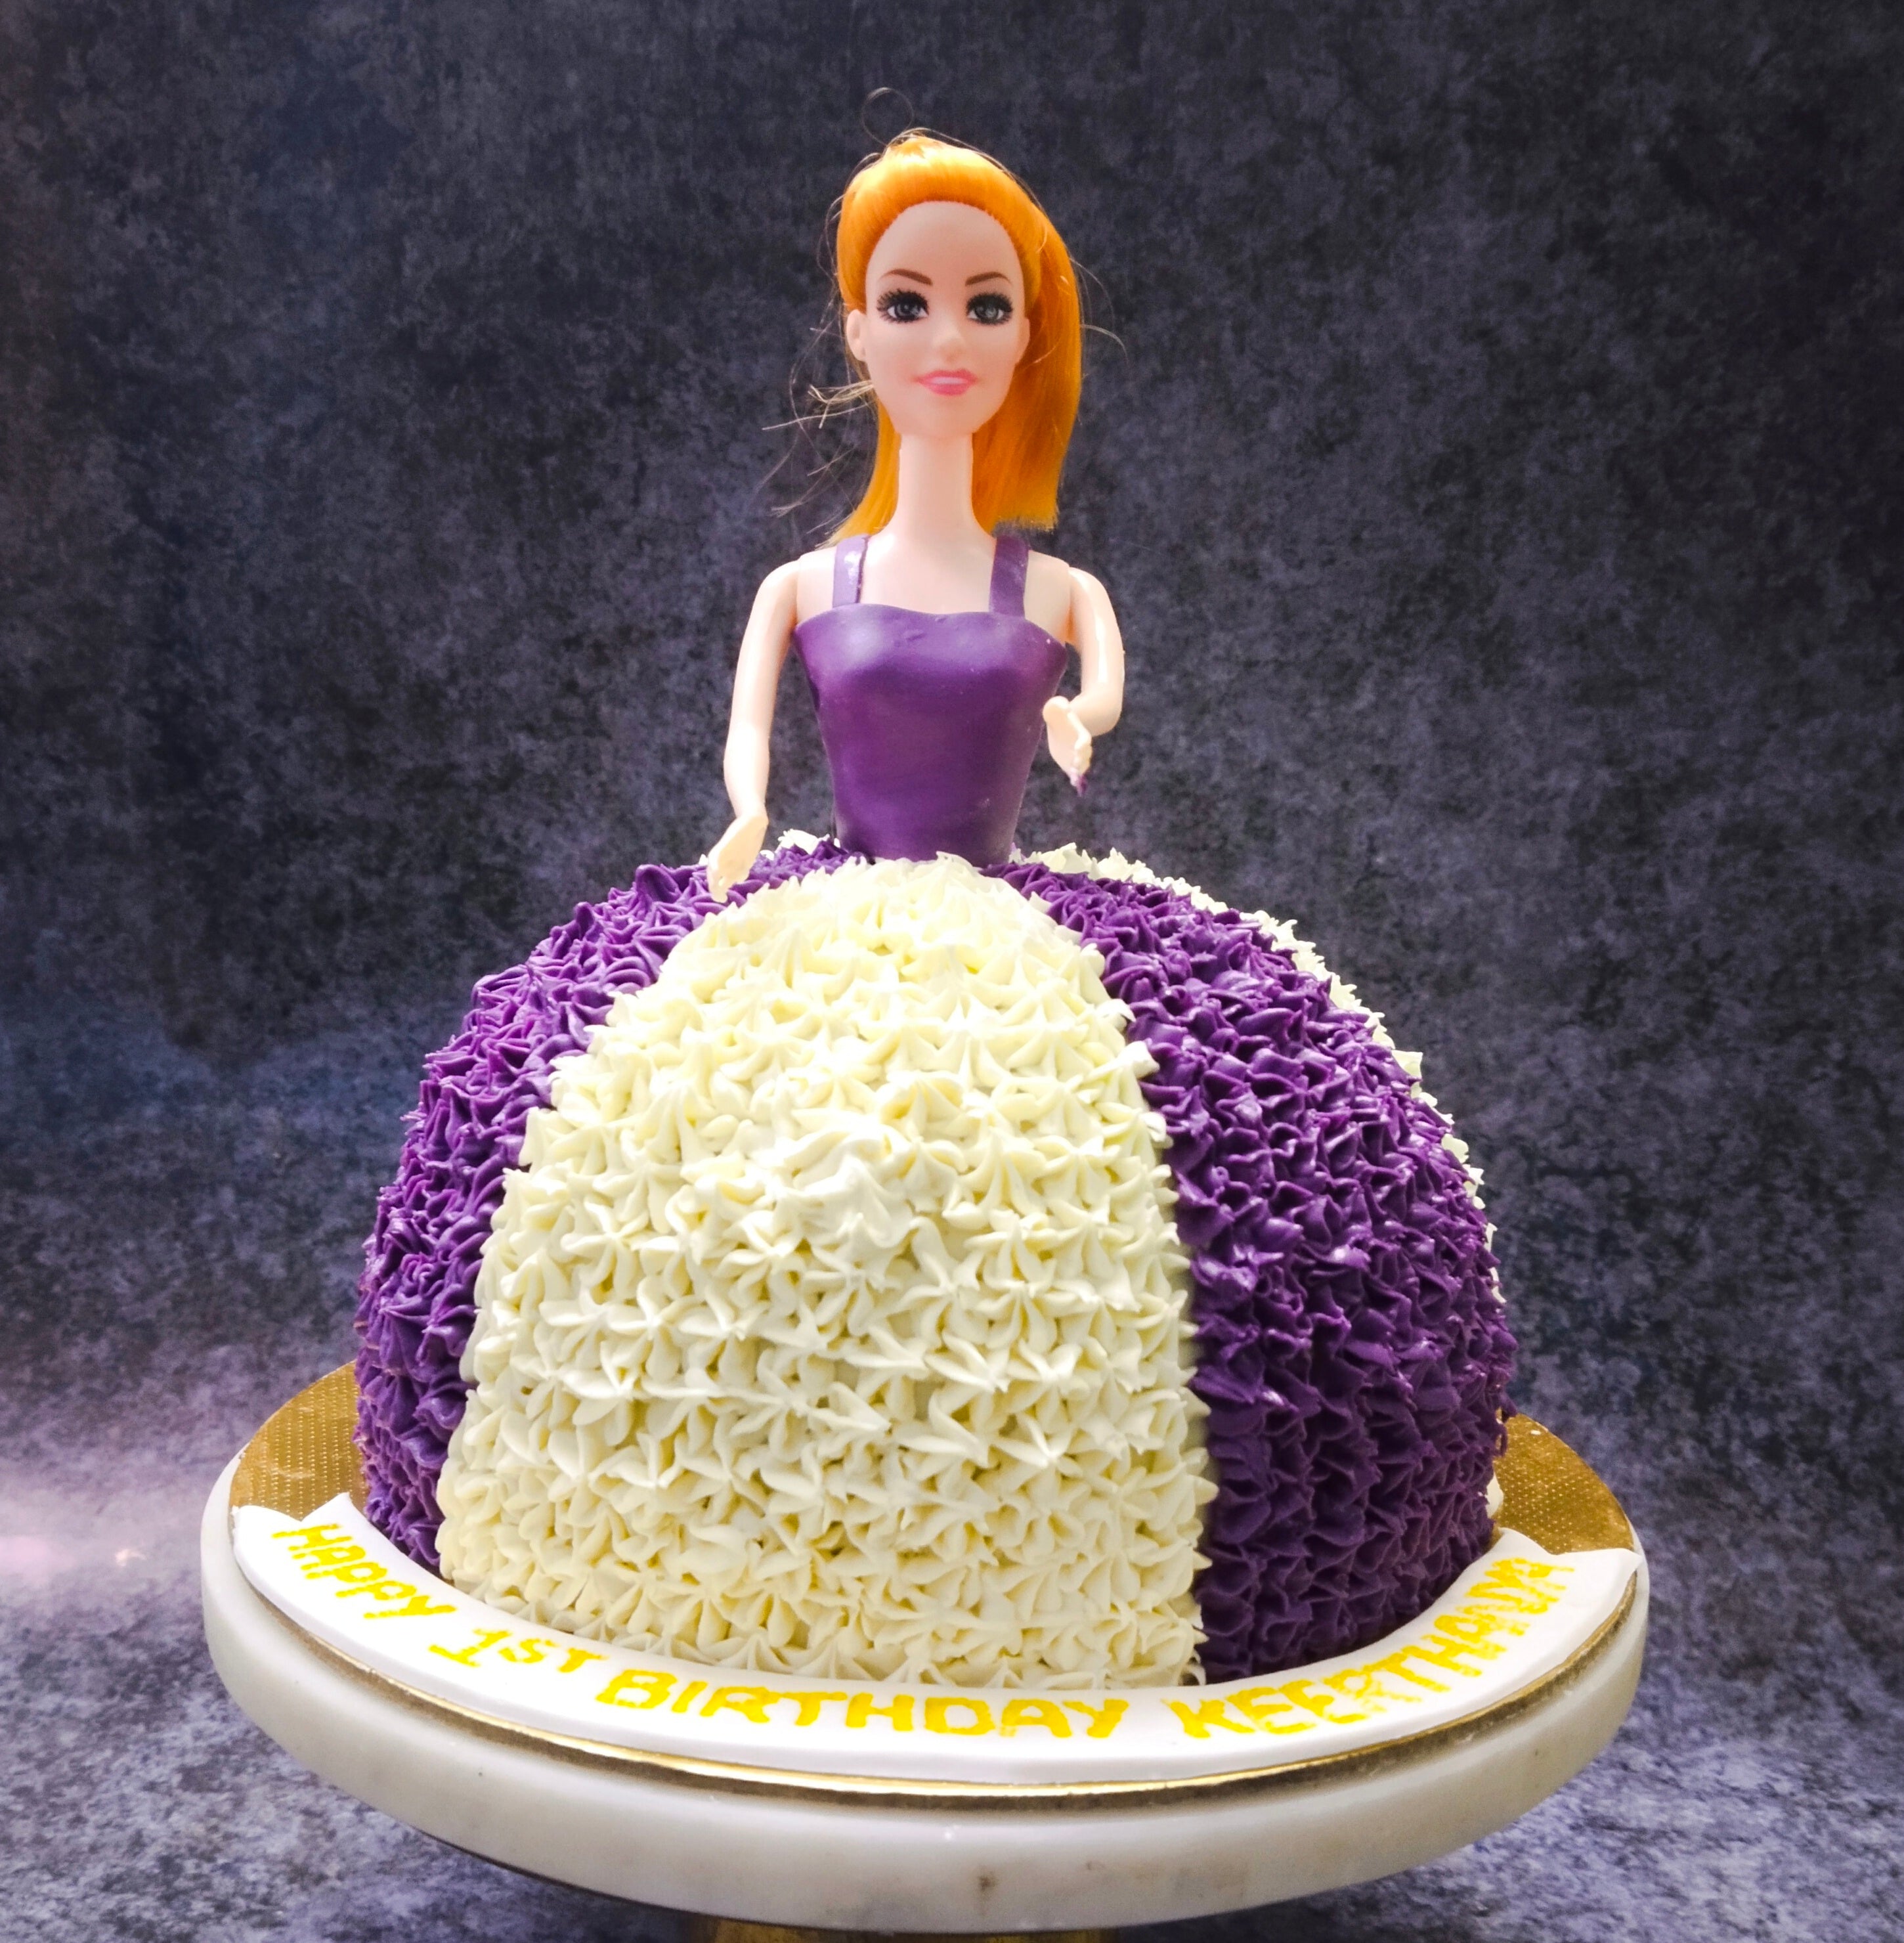 Elsa Doll Cake #229Characters – Michael Angelo's